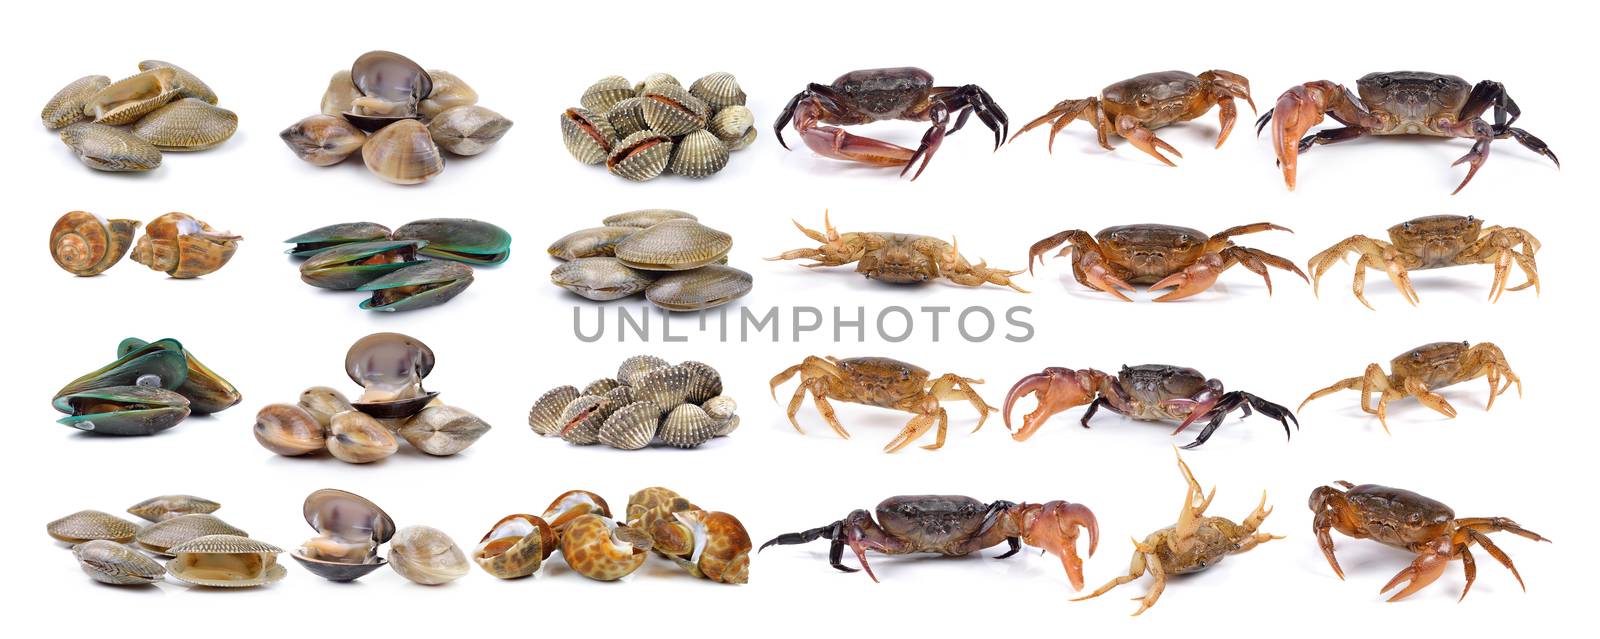  crab and enamel venus shell, Clam shellfish, Surf clam, mussel, by sommai